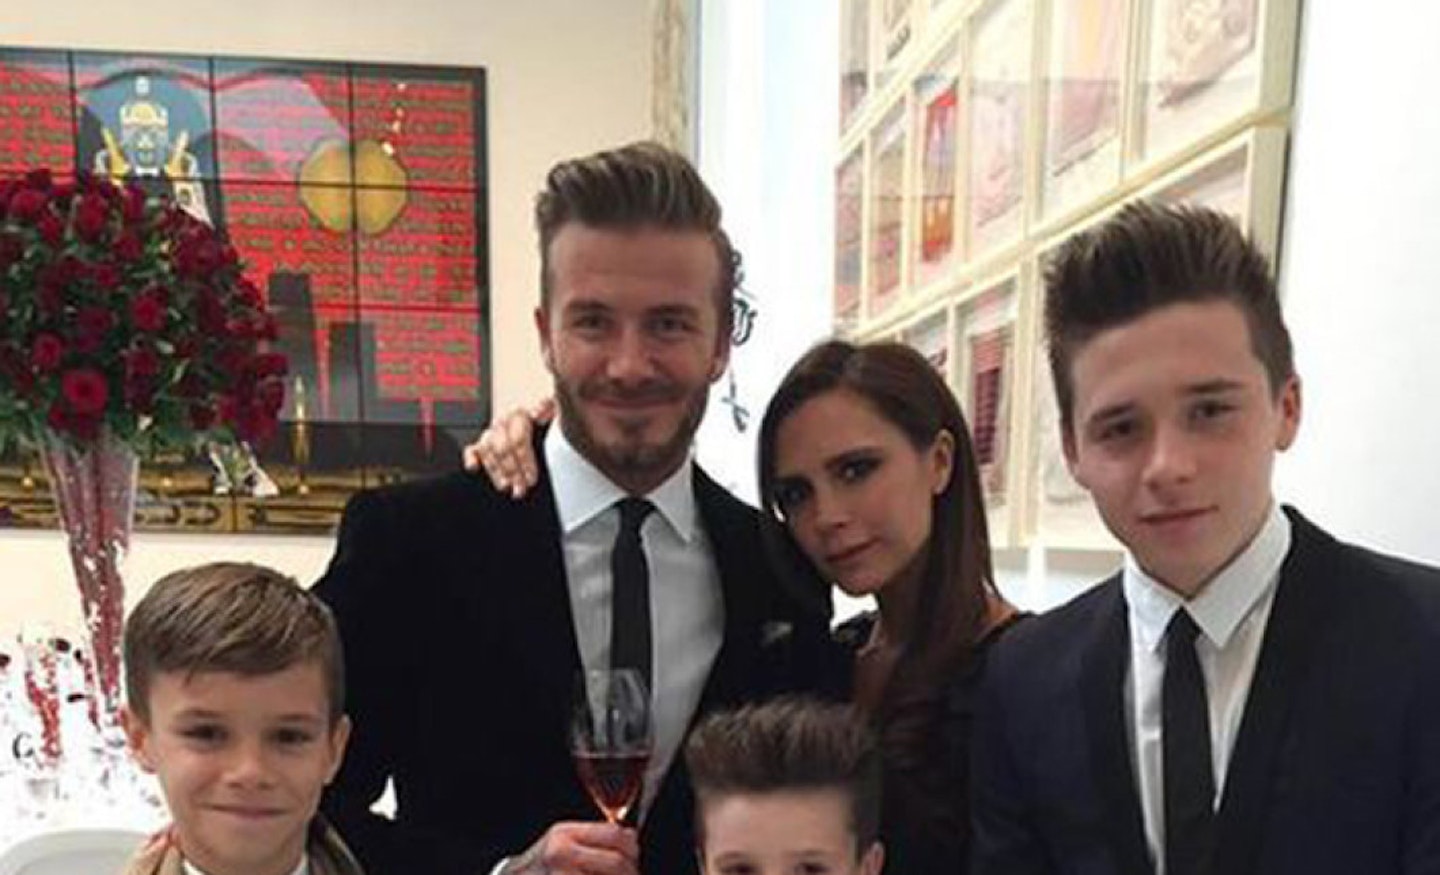 The Beckham Family, July 2015